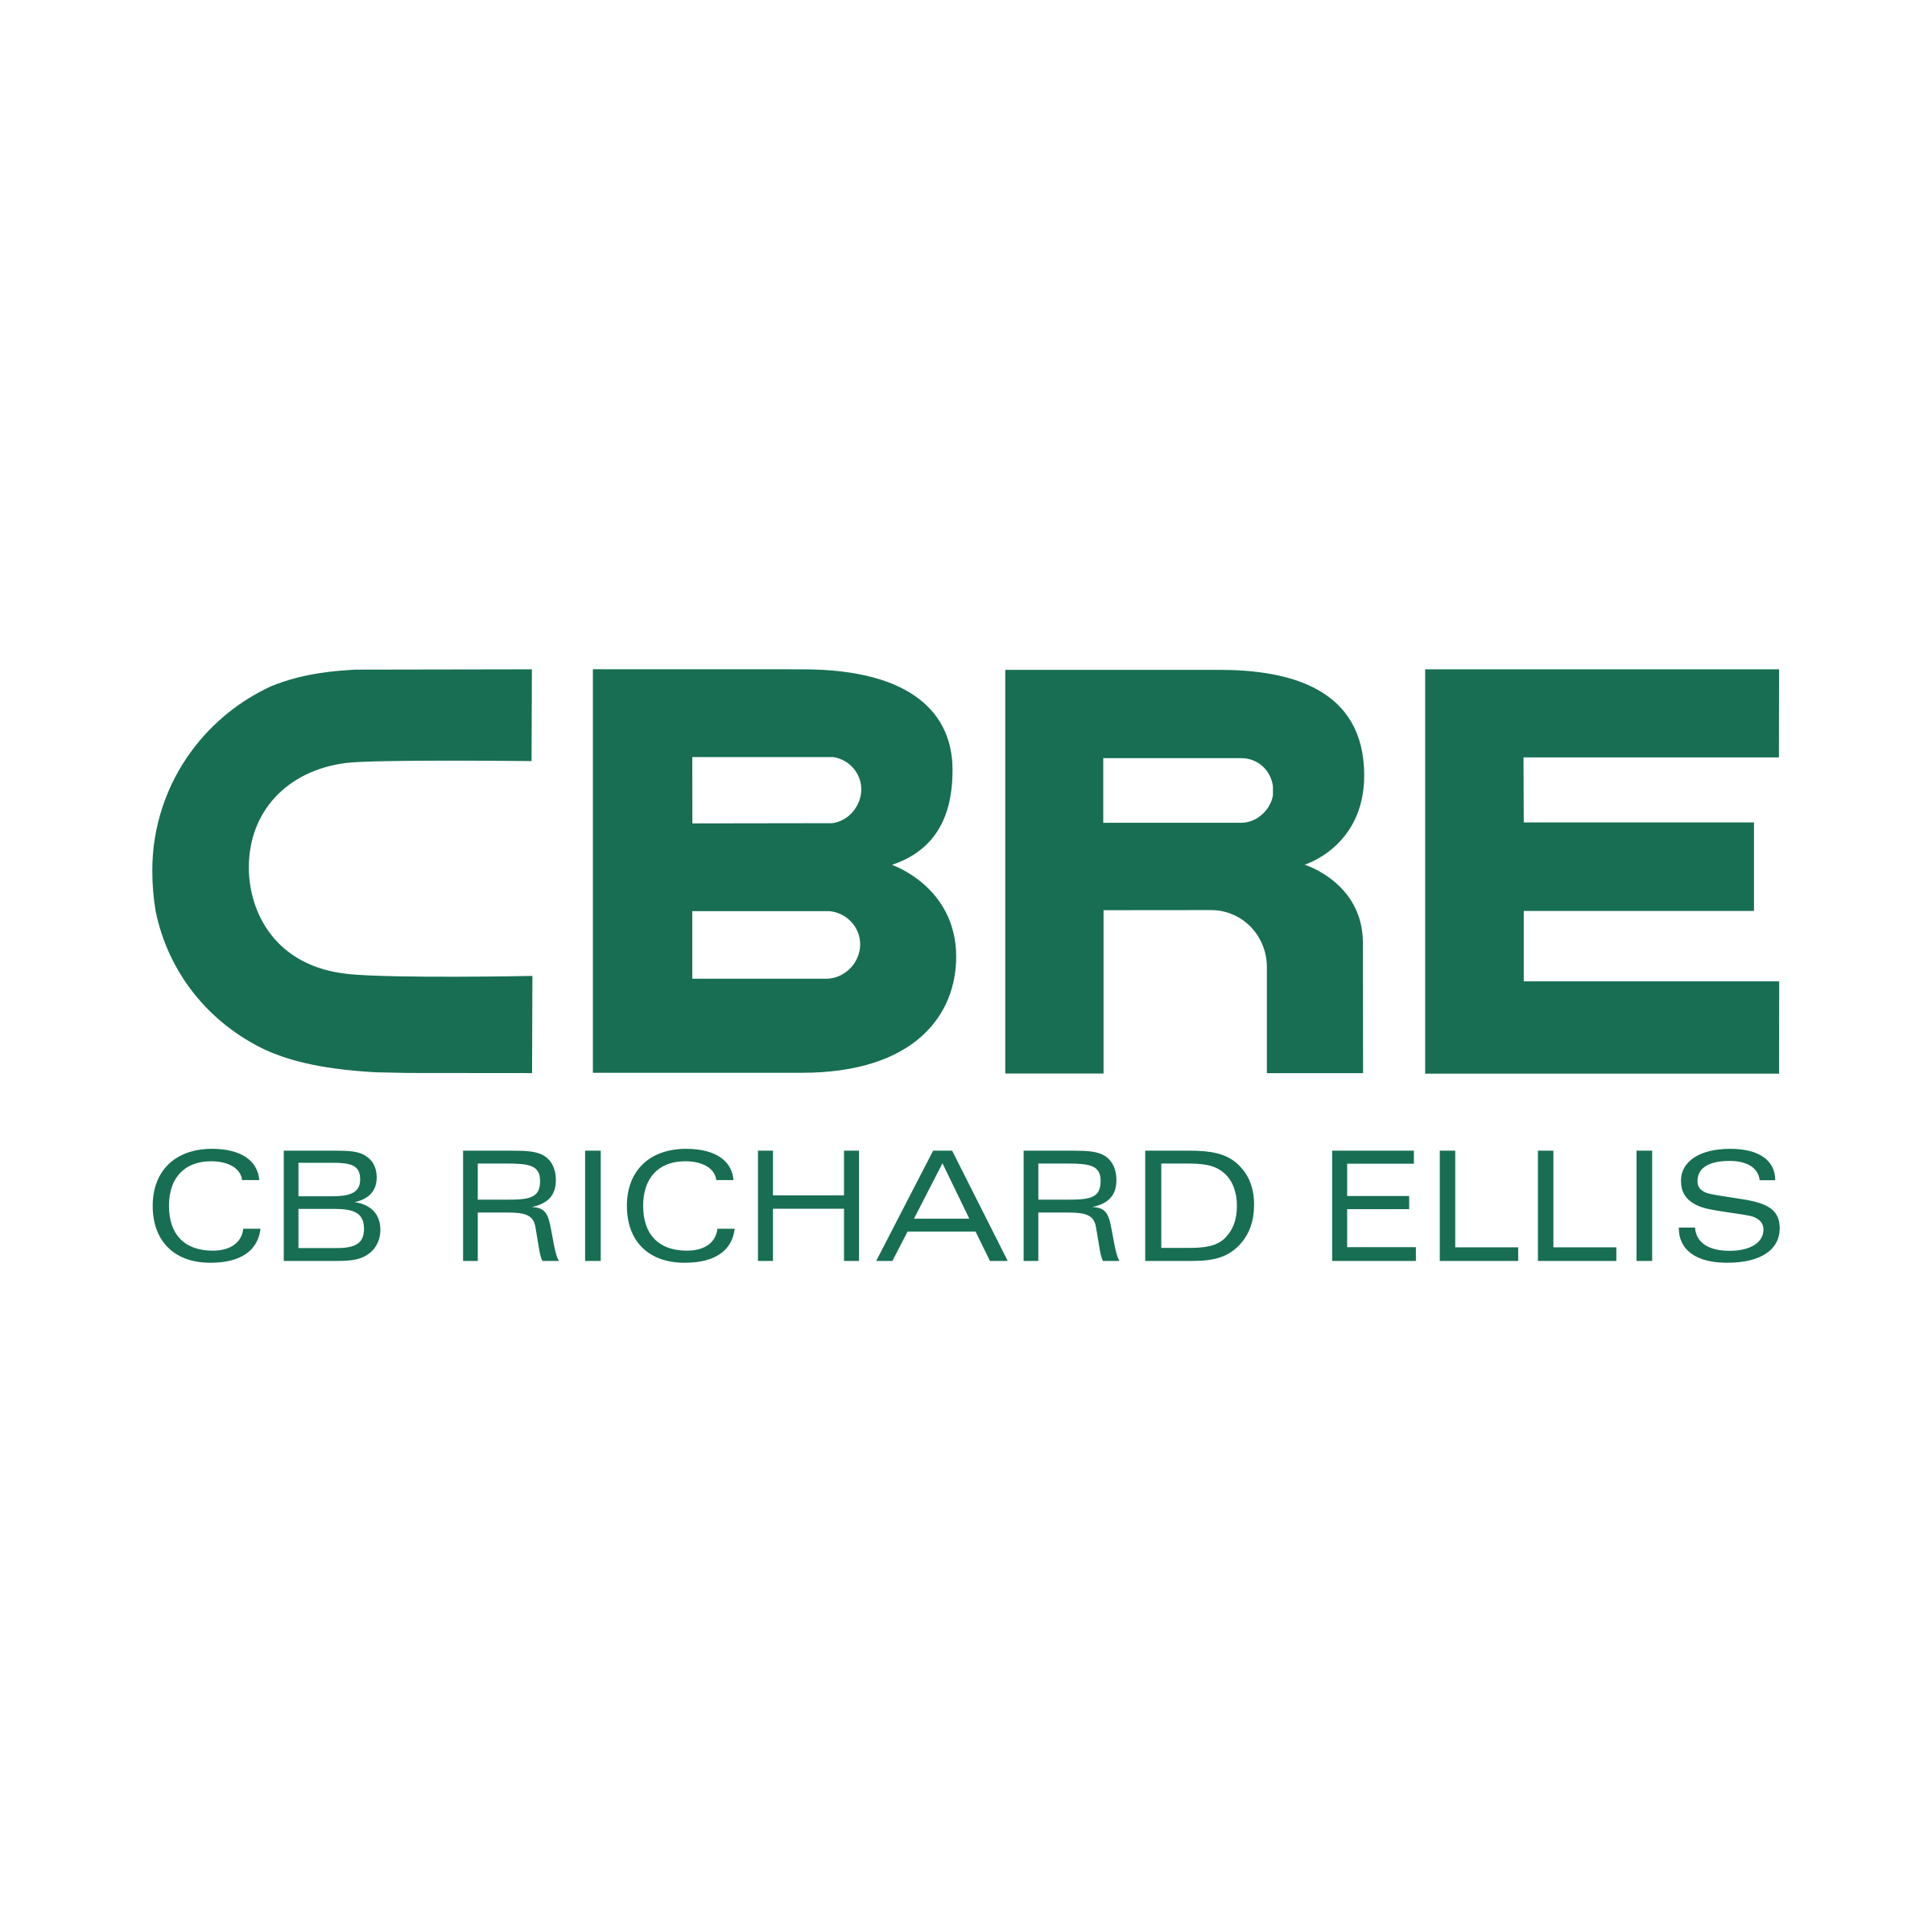 Ellis Logo - CB Richard Ellis Logo PNG Transparent & SVG Vector